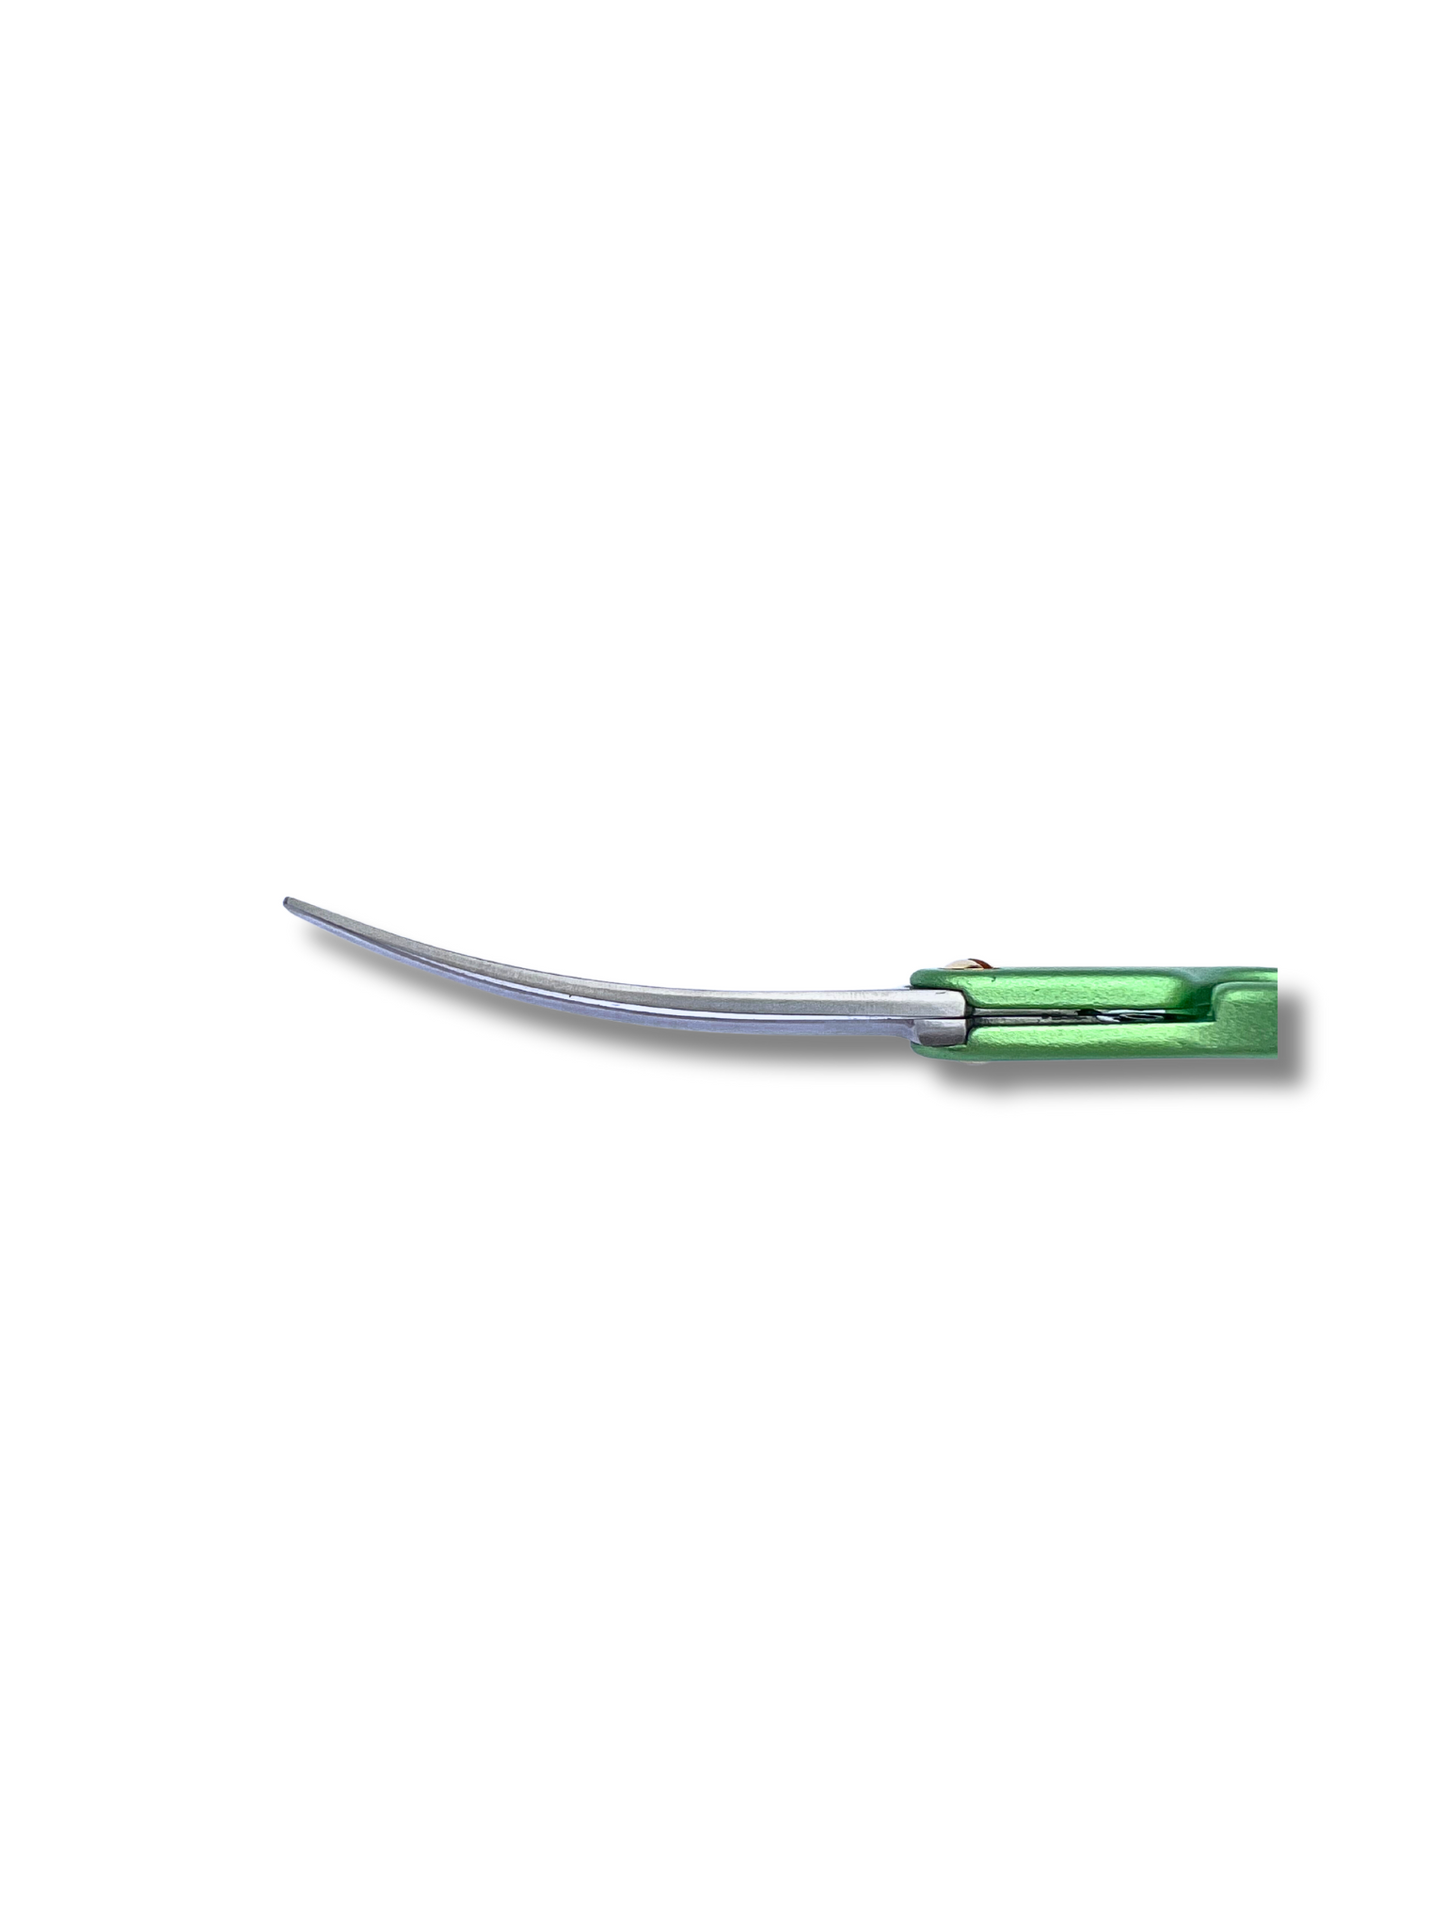 QMD-60 professional curved scissor 6.0"